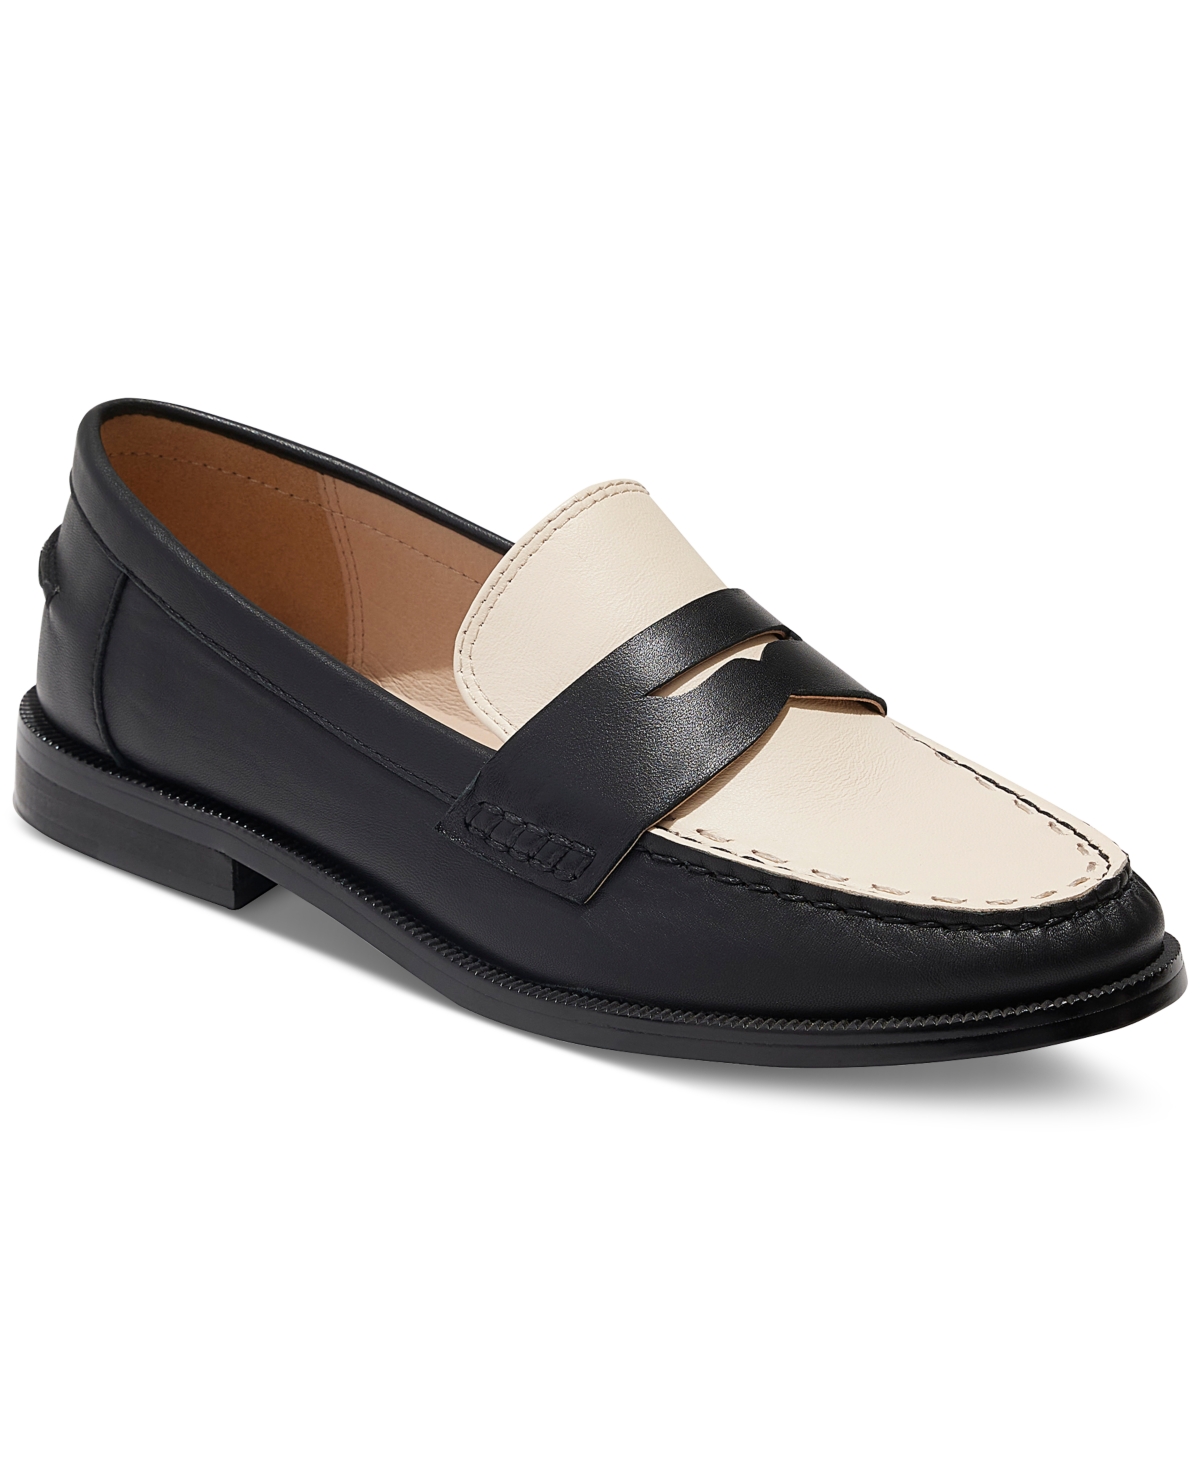 Women's Tipson Slip-On Penny Loafer Flats - Black, Ivory